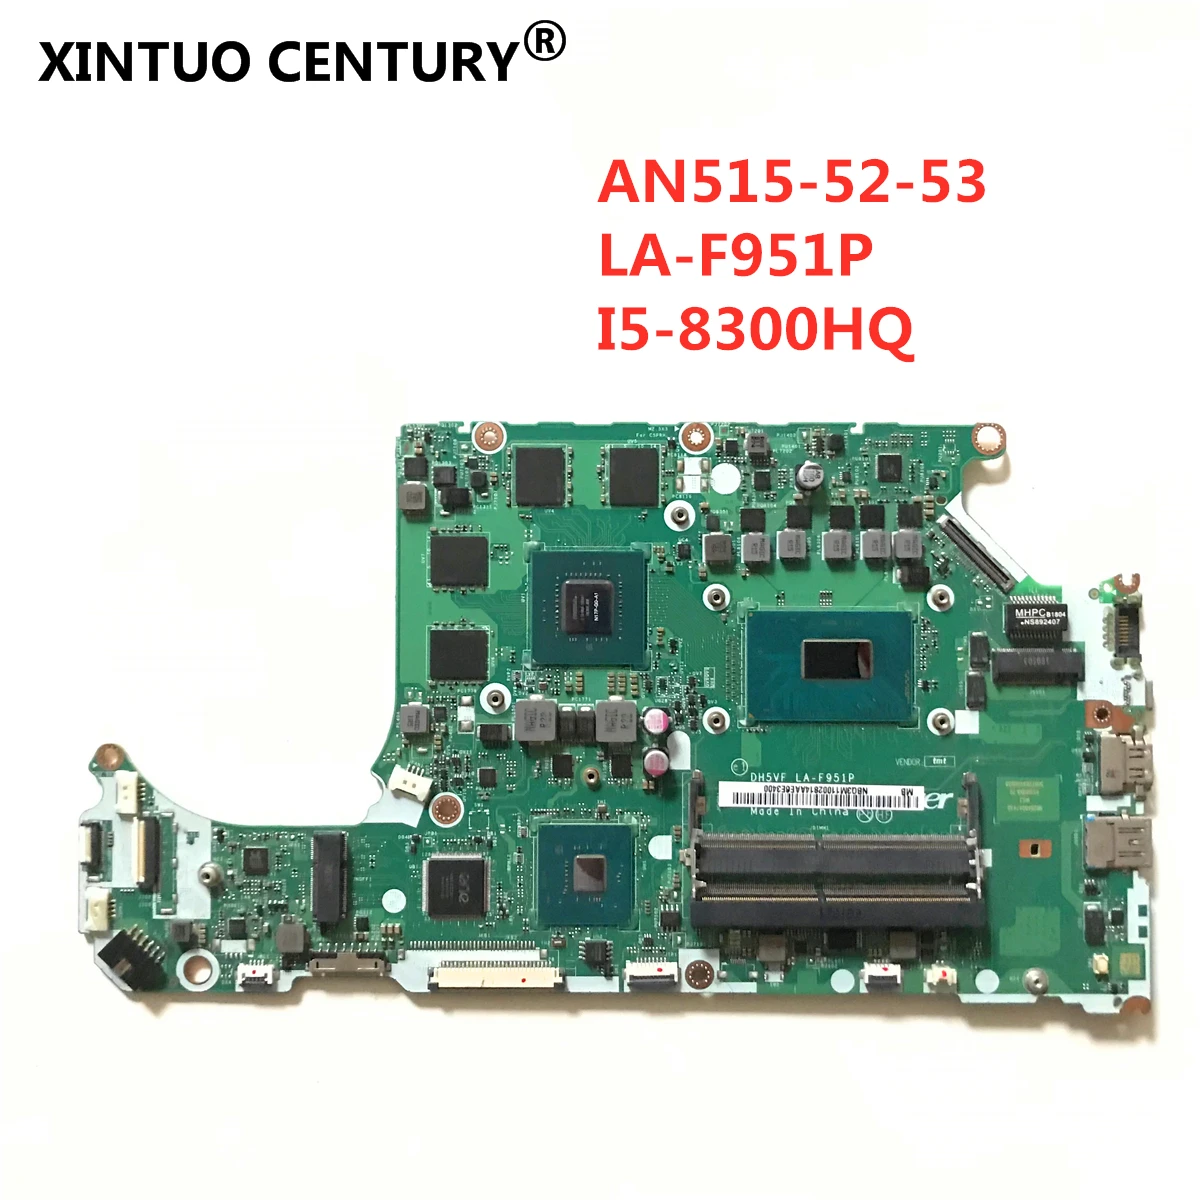 

NBQ3L11001 DH5VF LA-F951P for Acer Nitro AN515-52 AN515-53 motherboard NB.Q3L11.001 SR3Z0 I5-8300HQ CPU GTX1050 4GB 100% tested